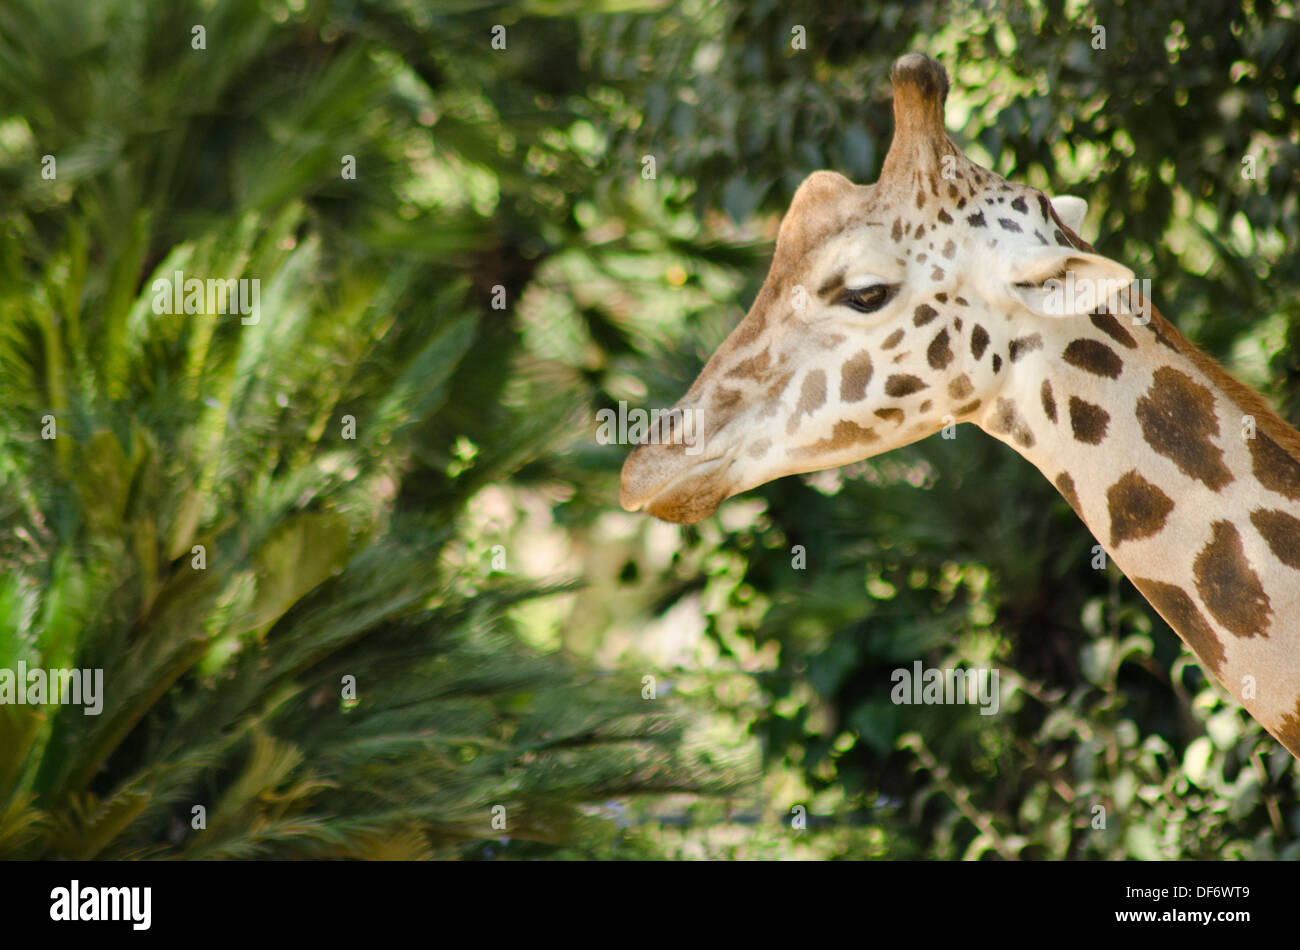 Europe, Spain, Barcelona, Zoo, Animals, giraffe Stock Photo